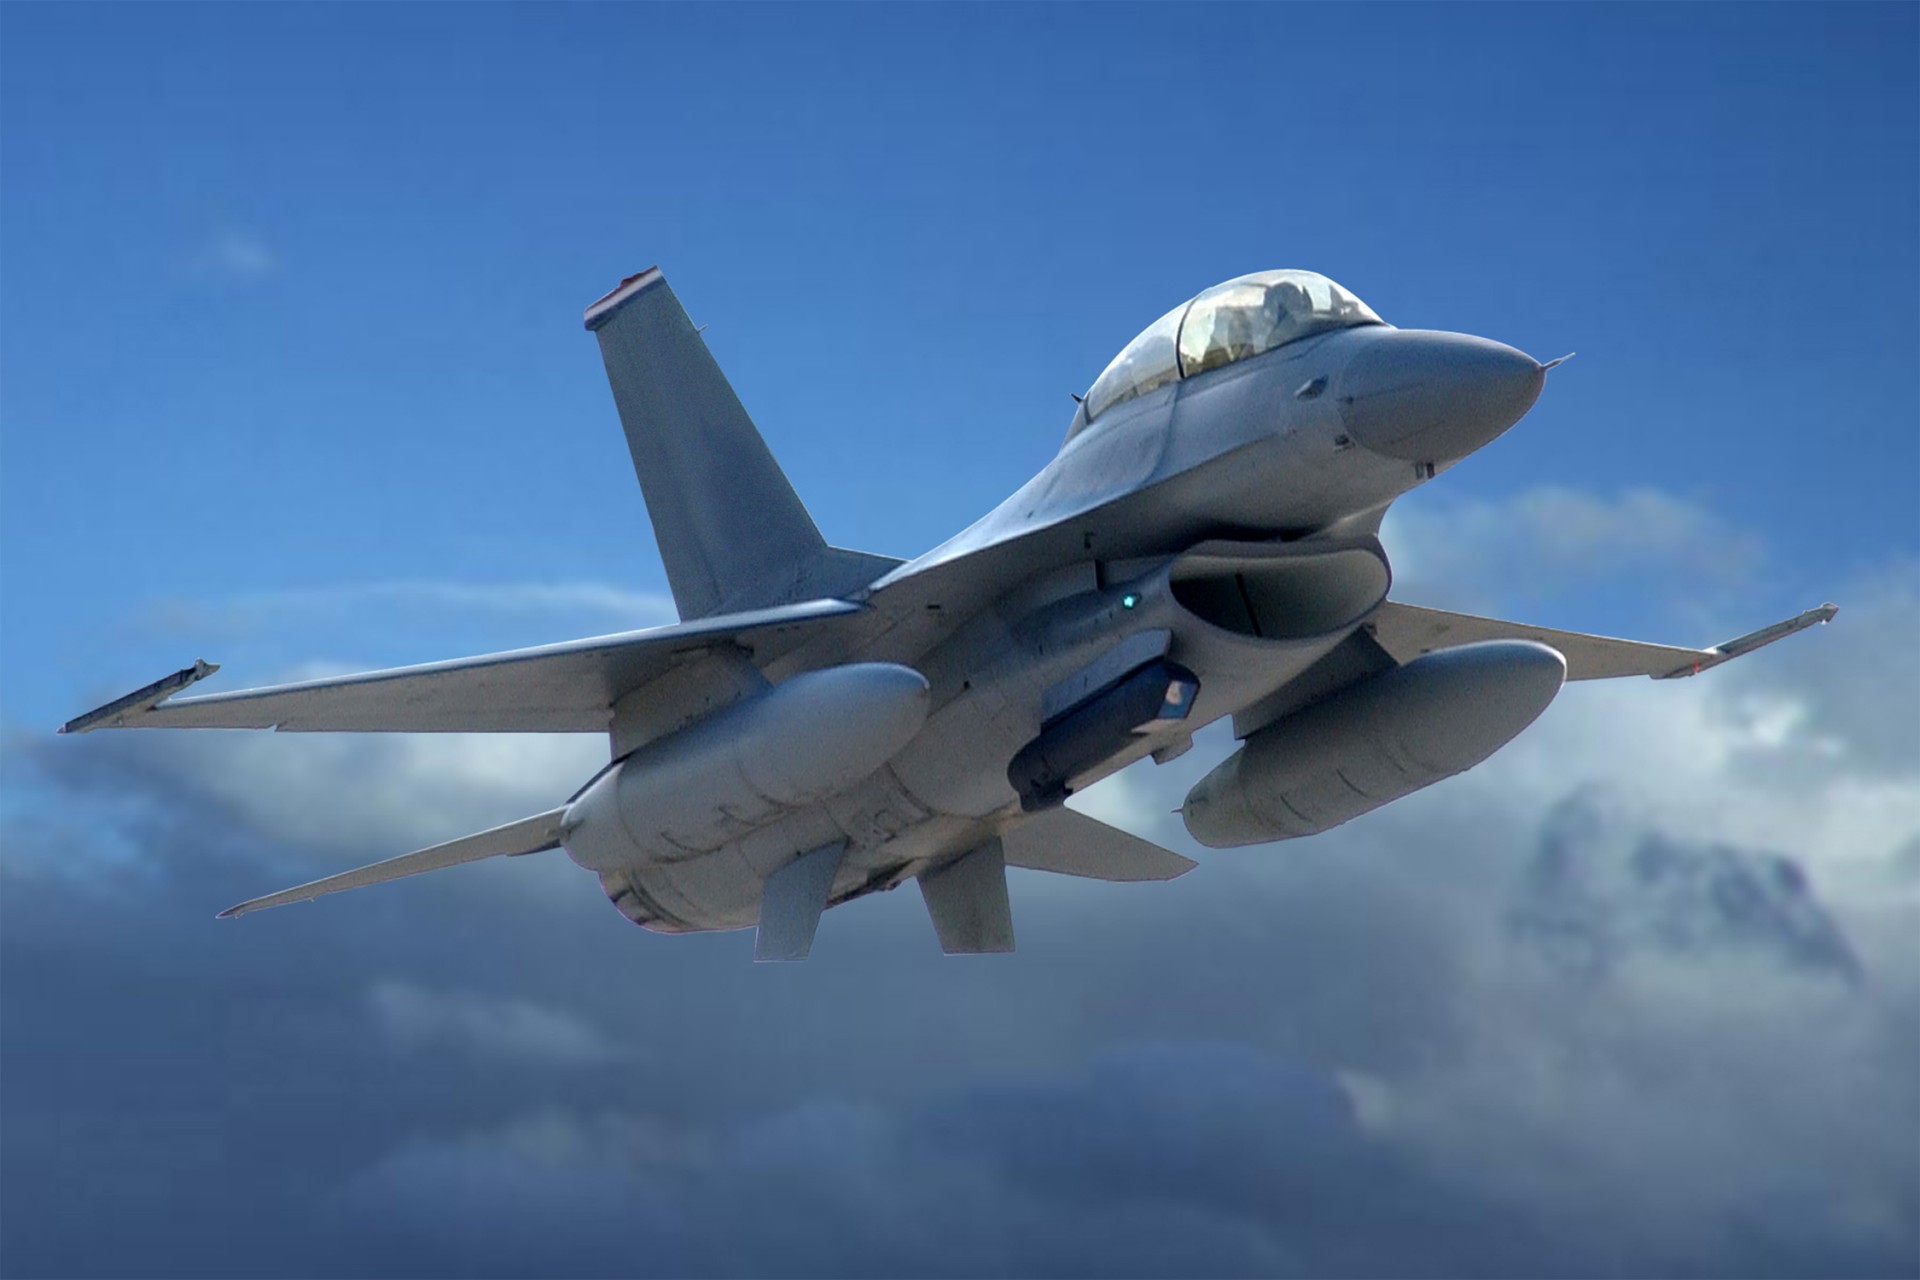 Samolot F-16 z zasobnikiem Sniper ATP. Ilustracja: Lockheed Martin.